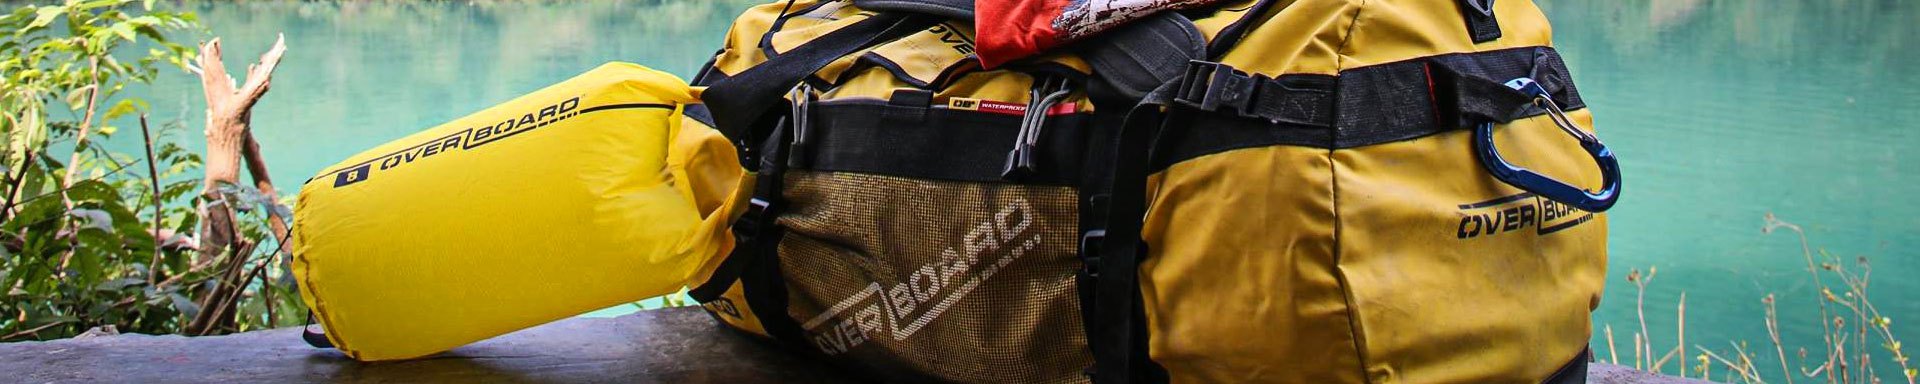 TEXSPORT Waterproof Bag 22 x 16 Inch Heavy Duty Yellow CHN 22458 